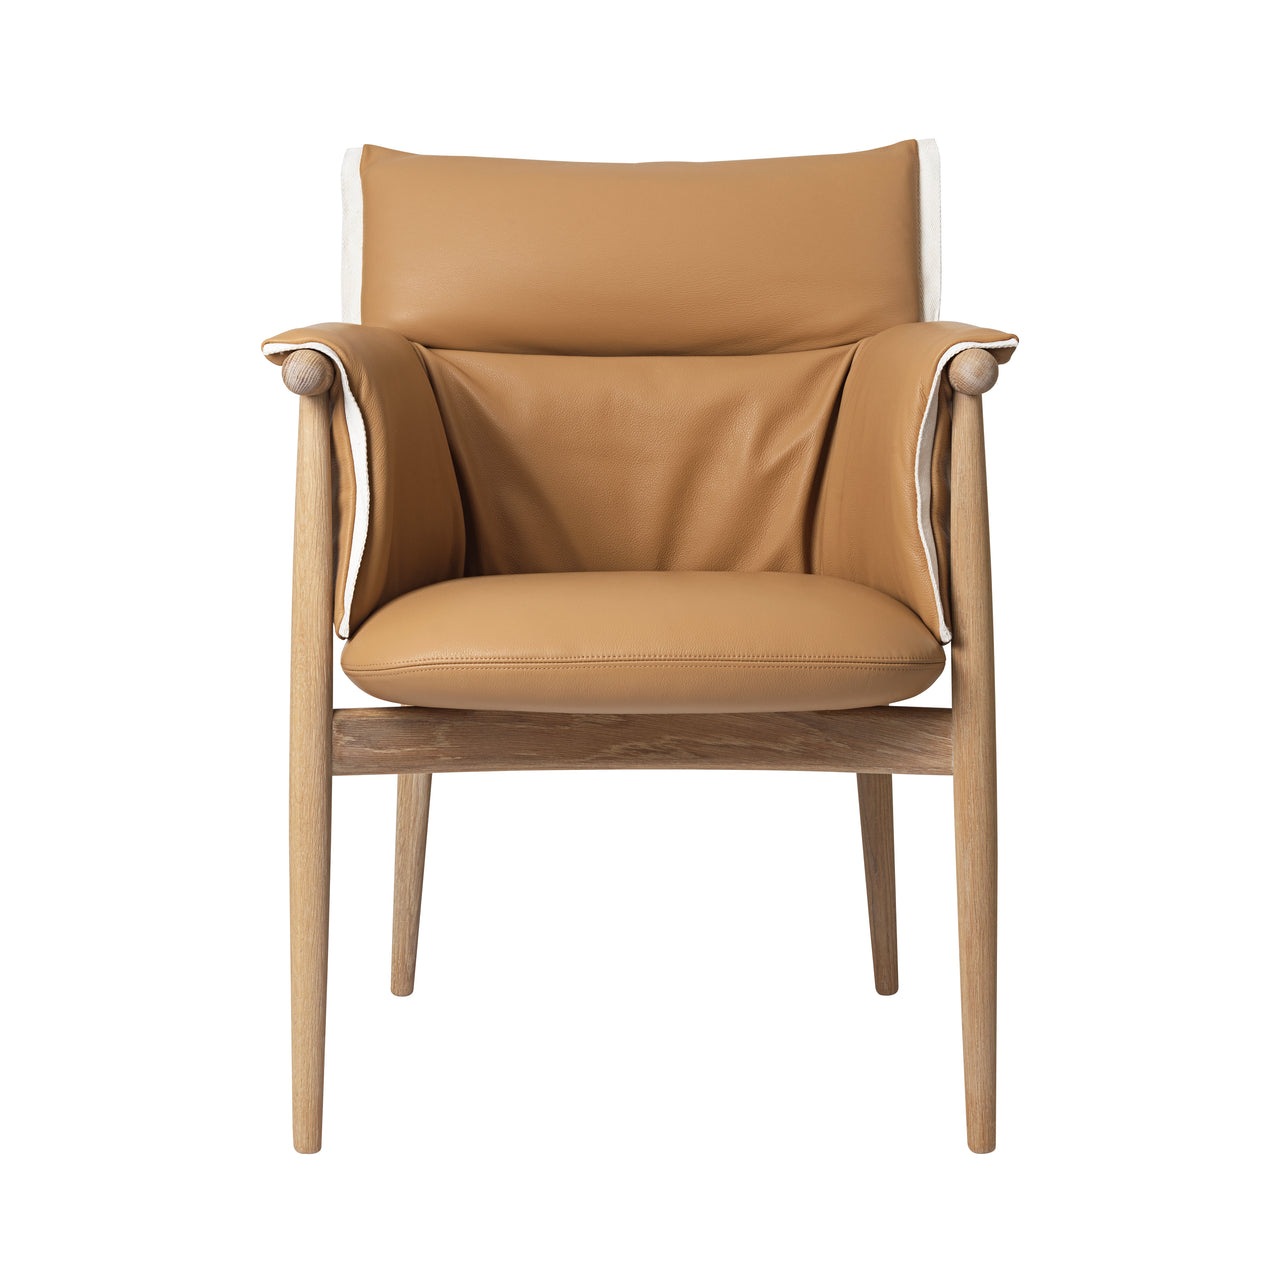 E005 Embrace Armchair: White Edging Strip + White Oiled Oak